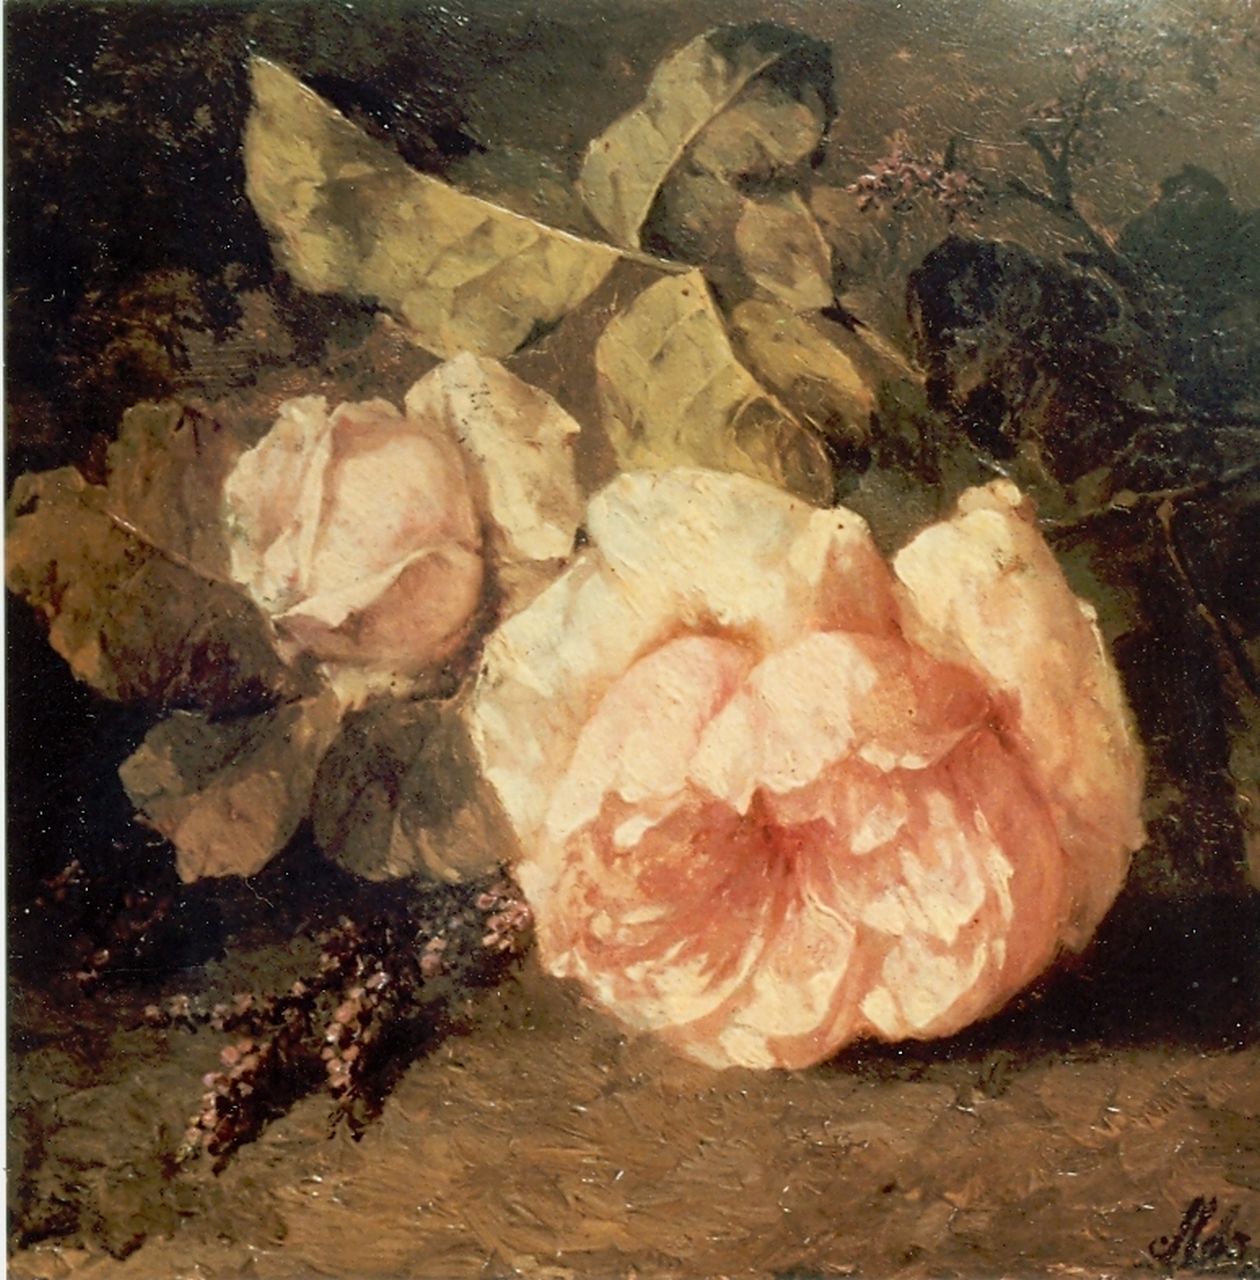 Roosenboom M.C.J.W.H.  | 'Margaretha' Cornelia Johanna Wilhelmina Henriëtta Roosenboom, Pink roses, Öl auf Holz 22,0 x 30,0 cm, signed l.r.